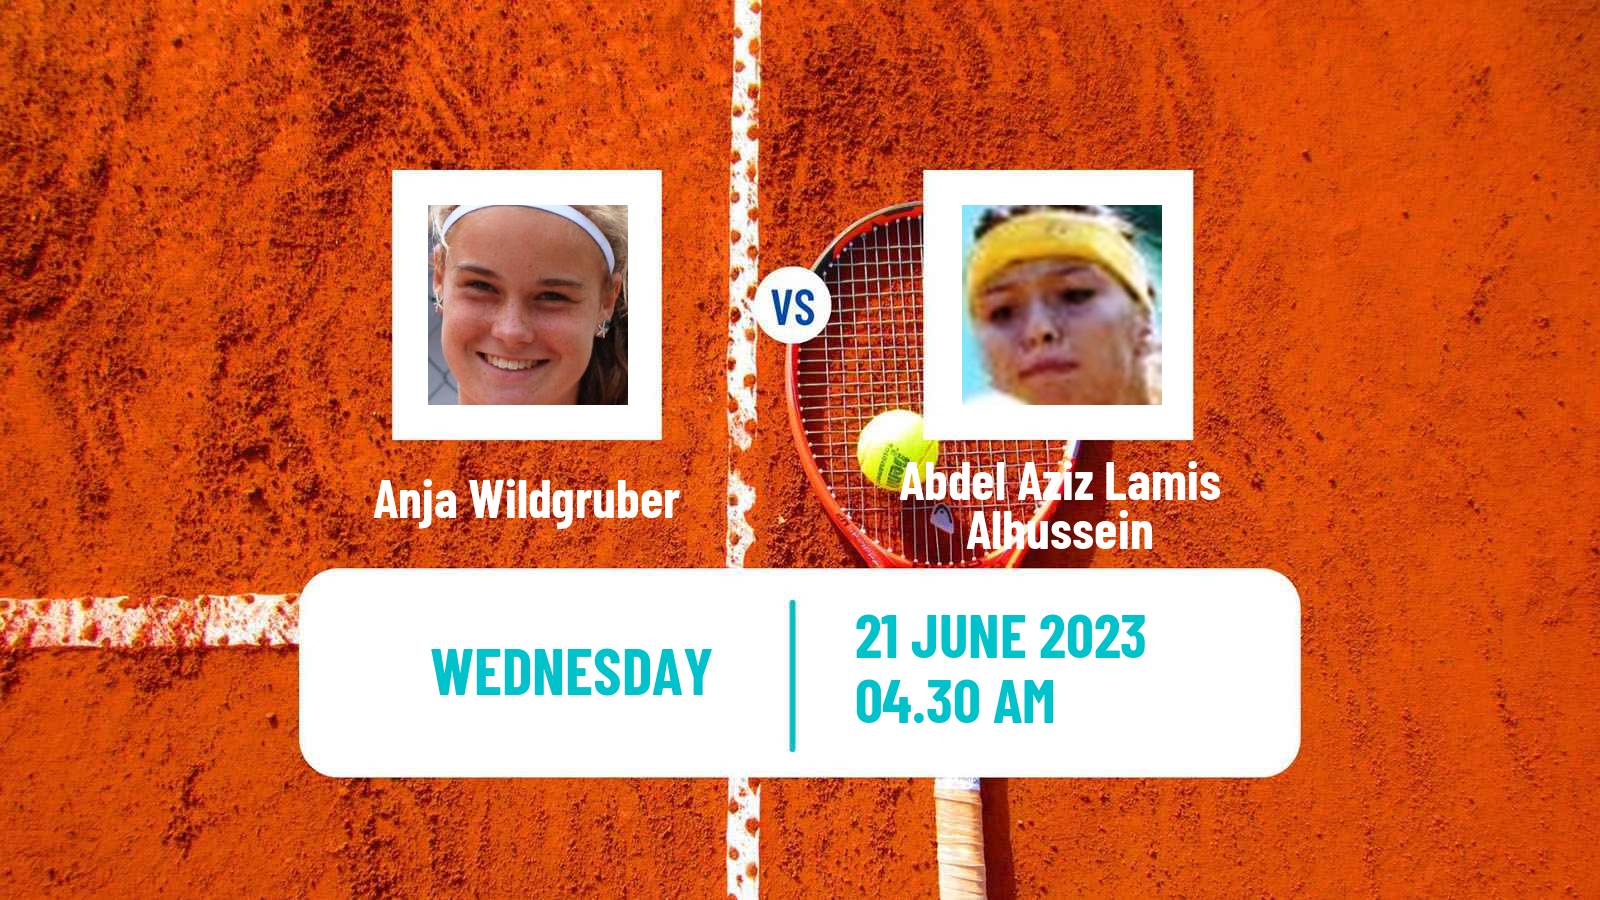 Tennis ITF W15 Monastir 20 Women Anja Wildgruber - Abdel Aziz Lamis Alhussein